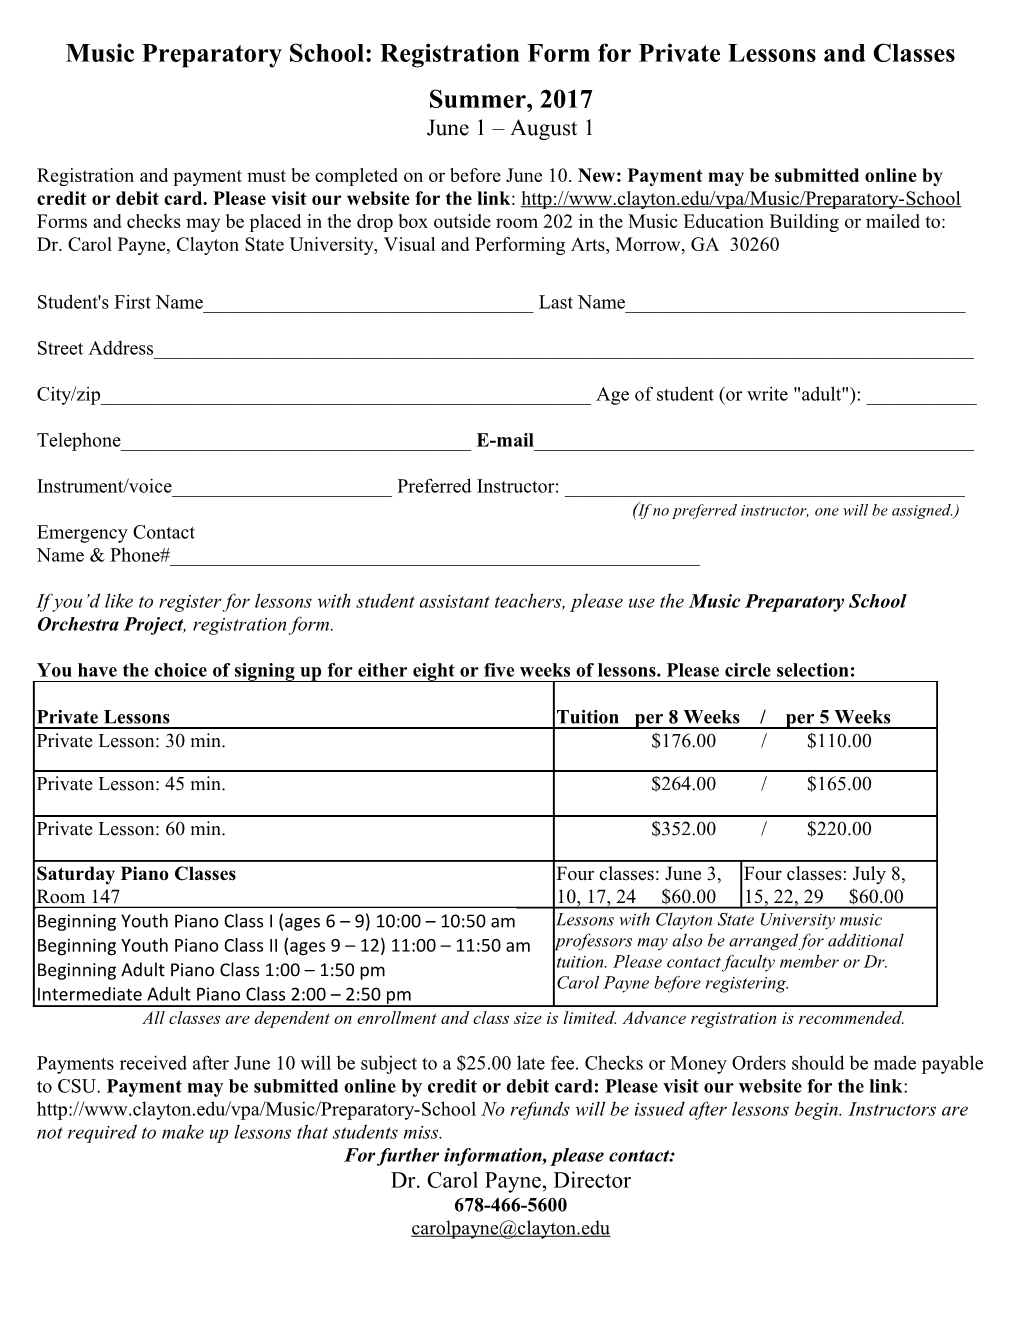 Music Preparatory School Registration Form